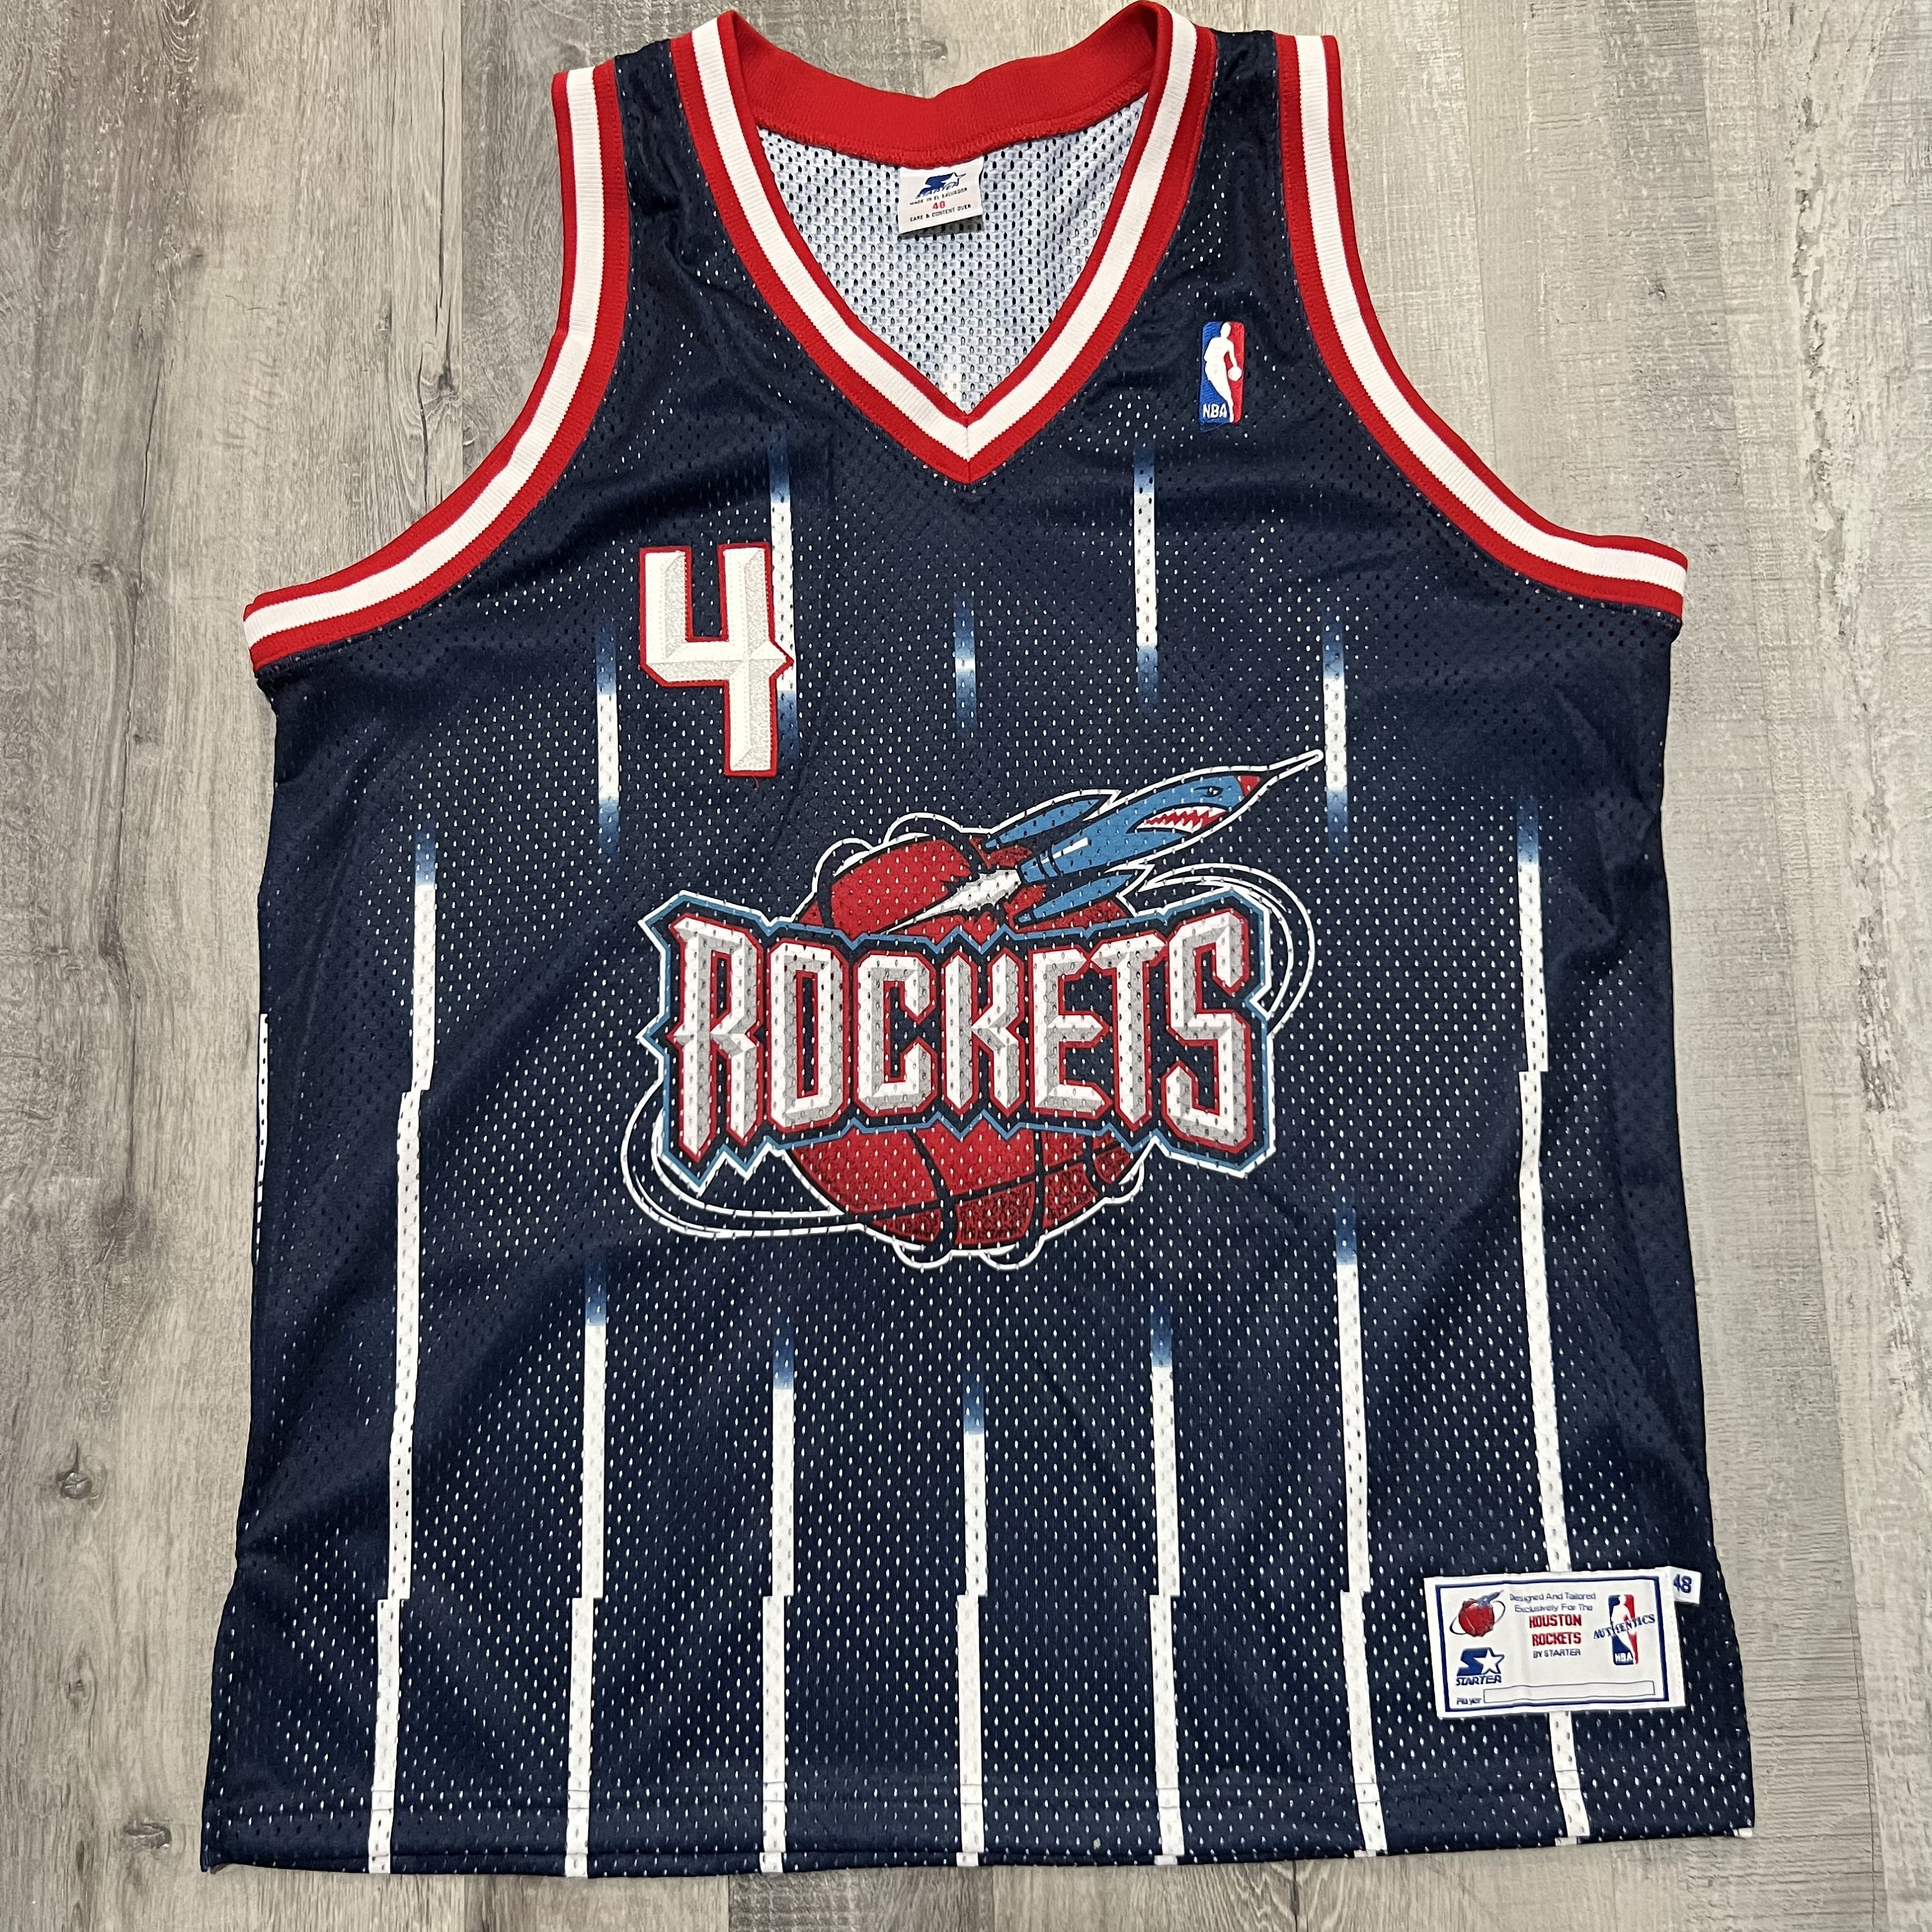 NEW Reebok NBA Houston Rockets Jersey Mens XL Blue Pinstripe